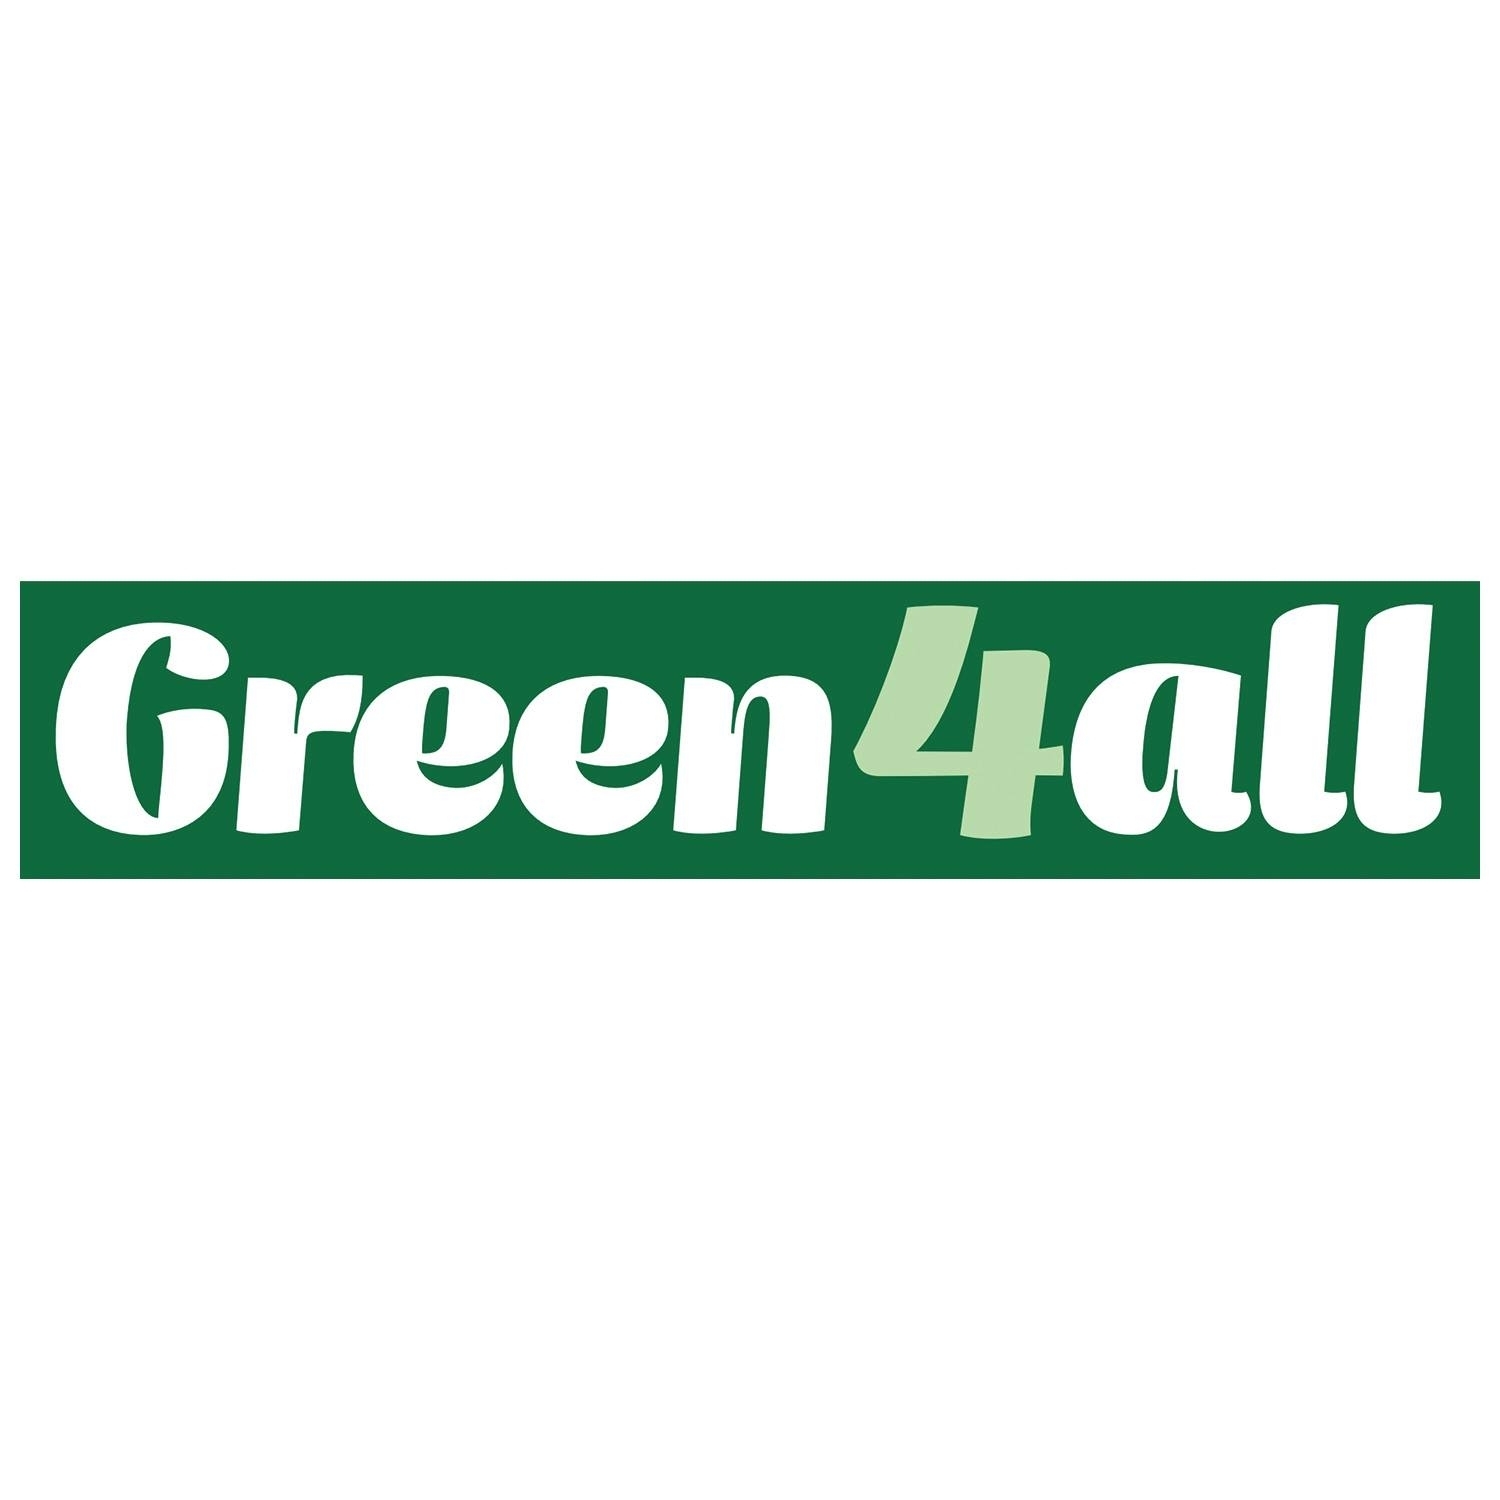 Green 4 All-logo